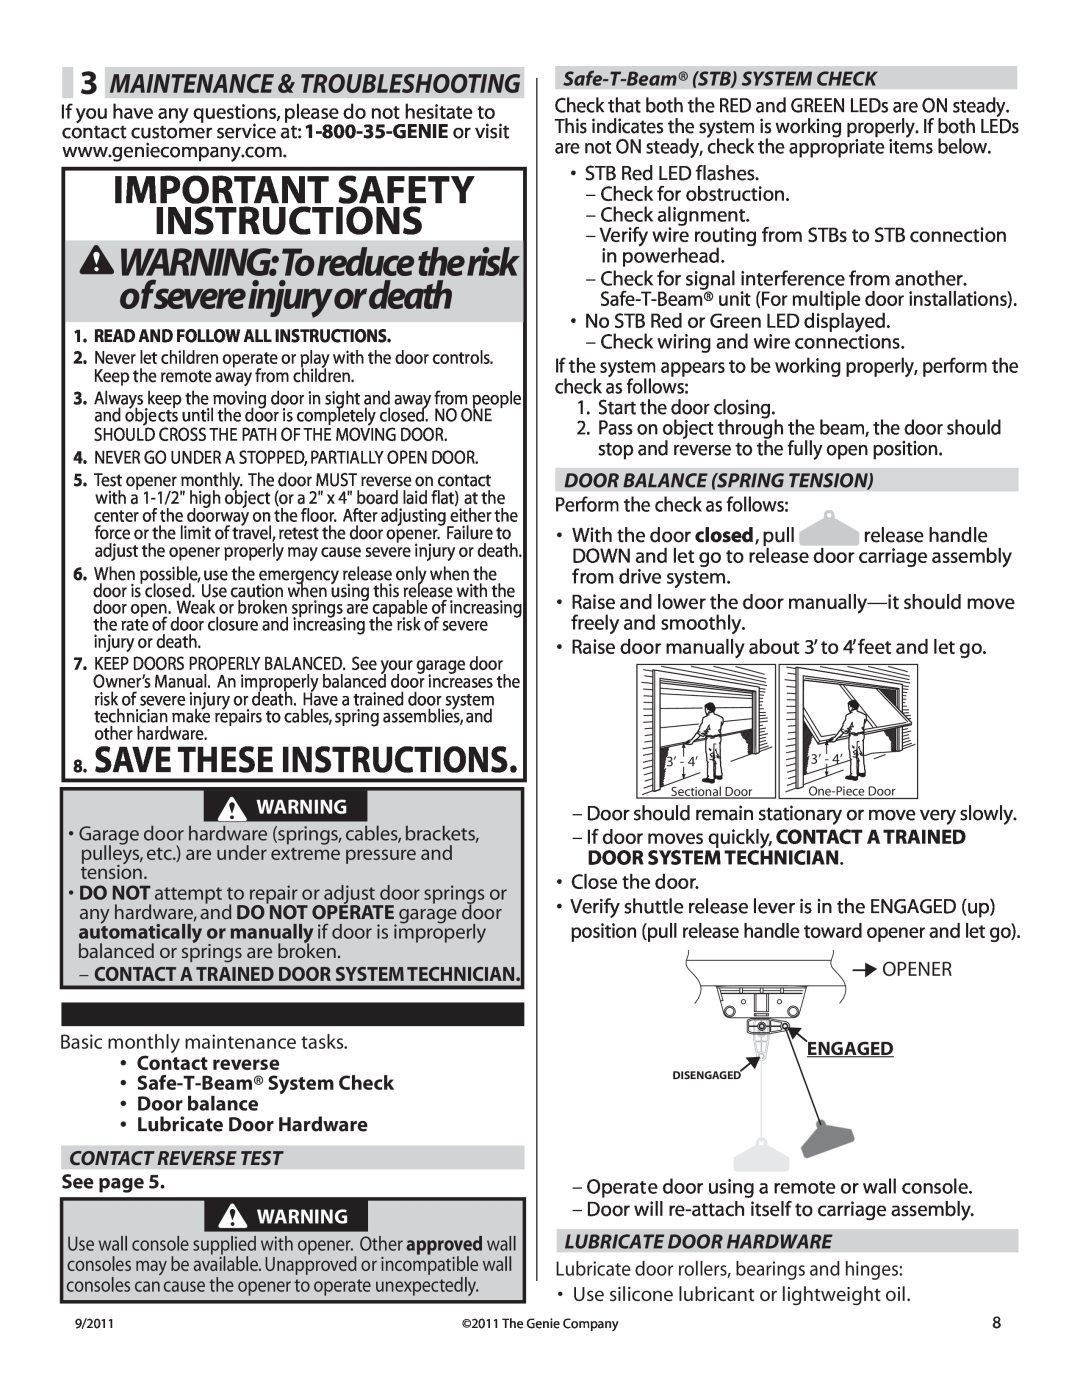 Genie 1500 Important Safety Instructions, WARNINGToreducetherisk ofsevereinjuryordeath, Maintenance & Troubleshooting 